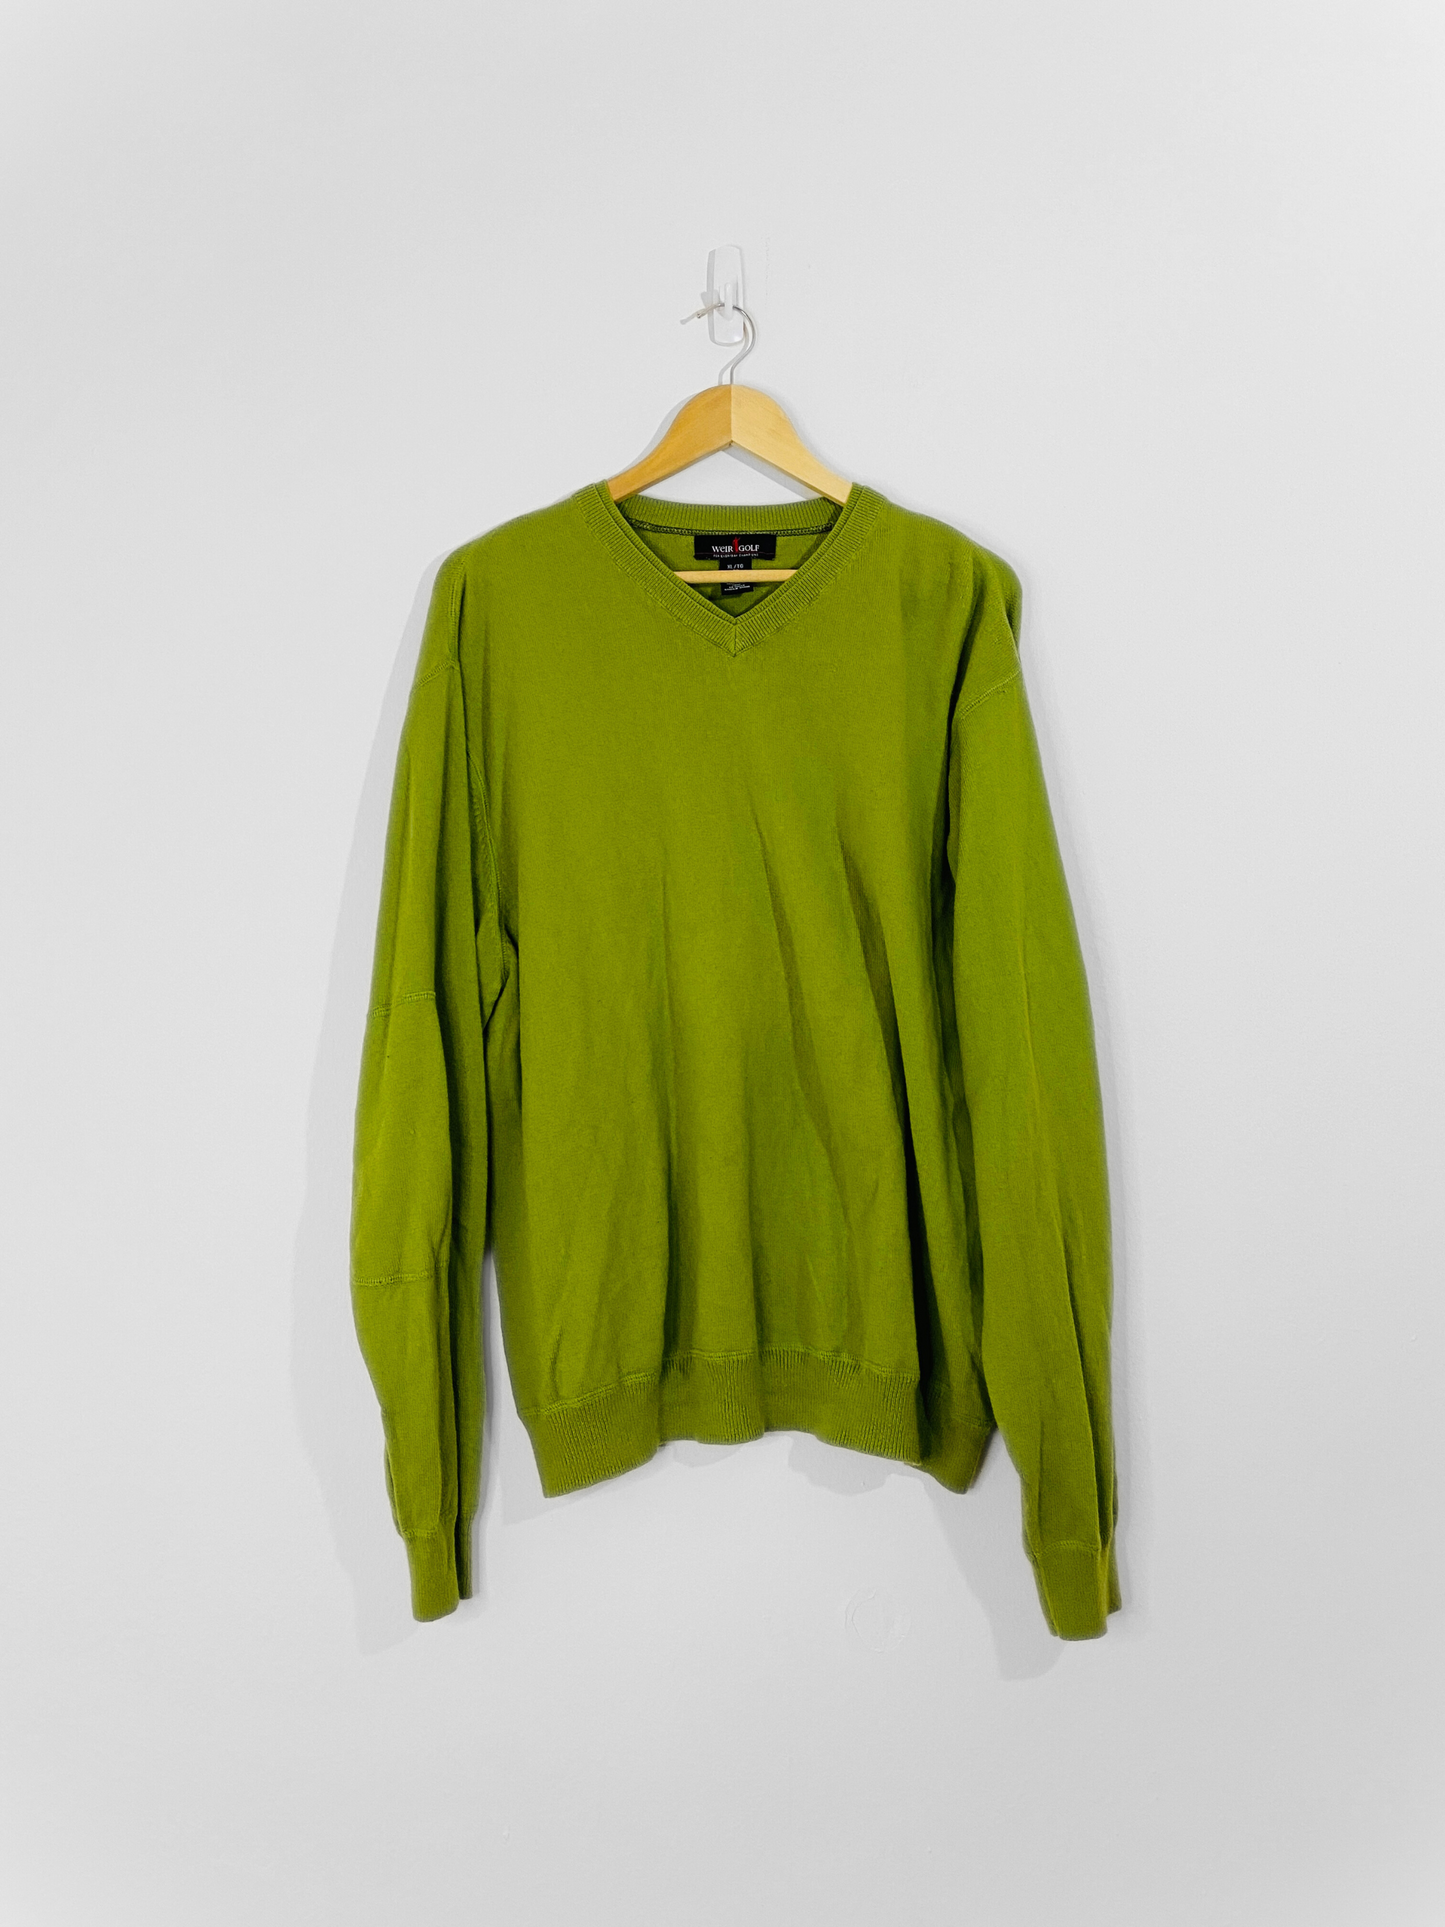 Green Sweater (Large)